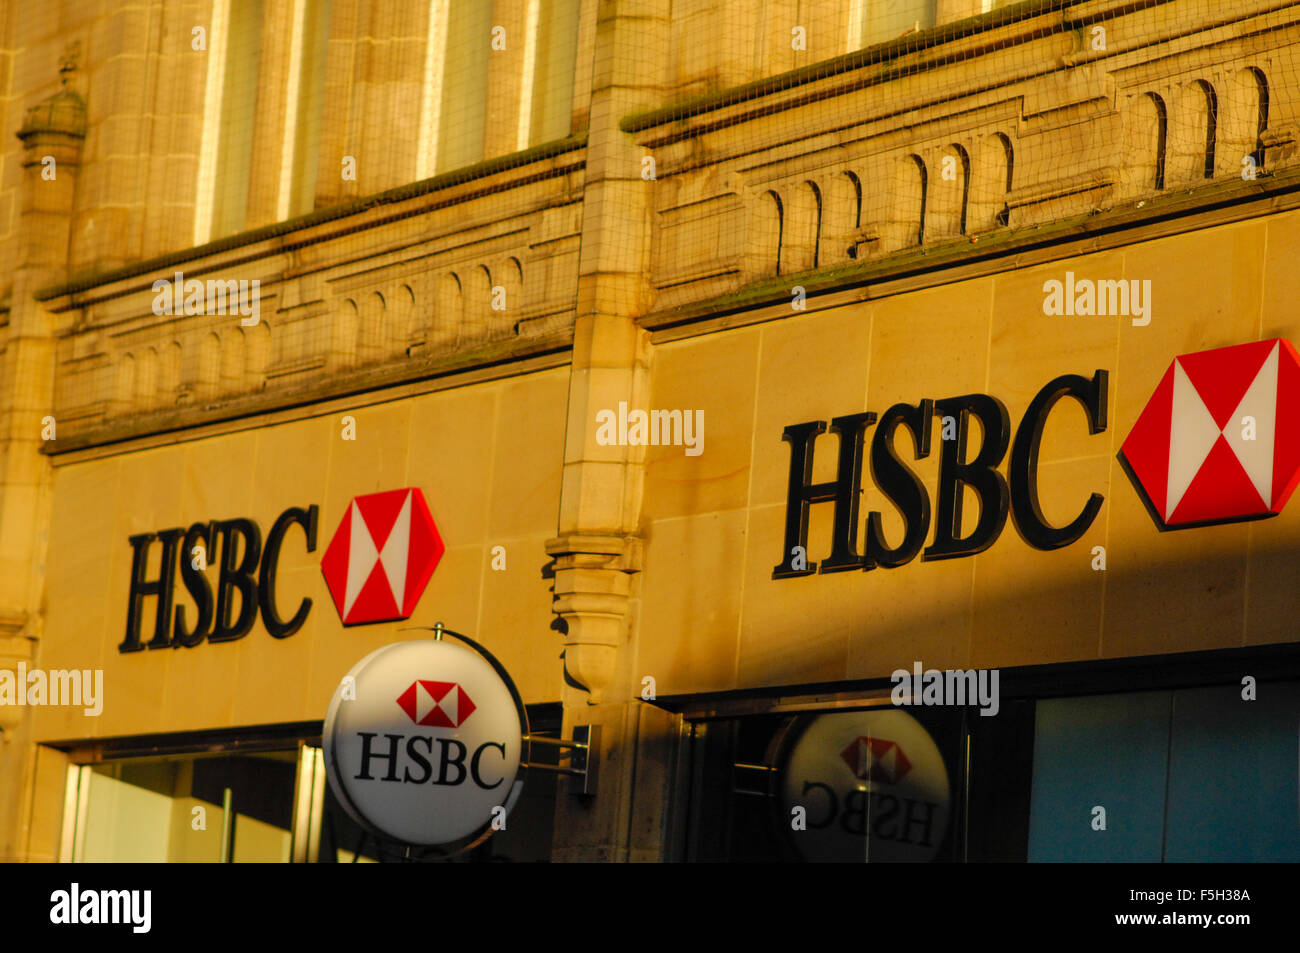 HSBC Bank logo branding Stock Photo